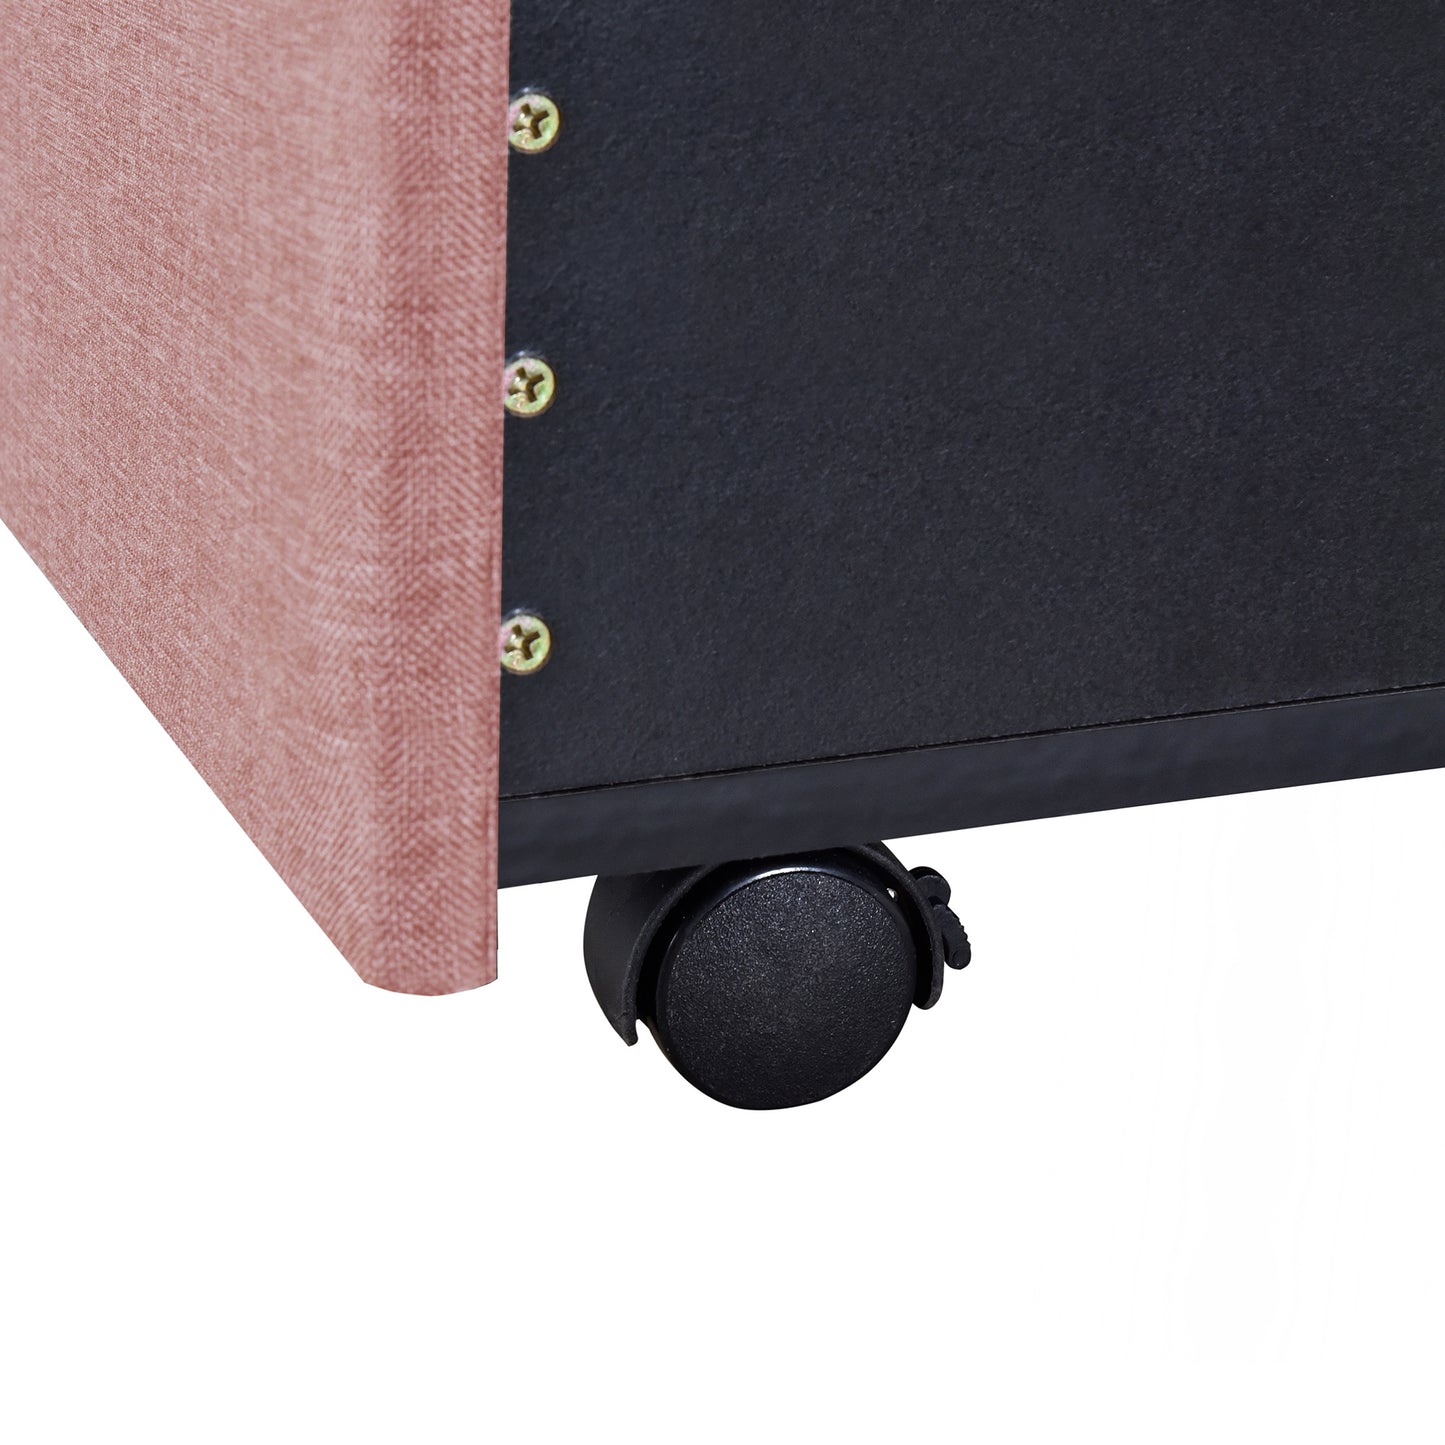 amber storage bed linen upholstered platform bed with 3 drawers (pink)